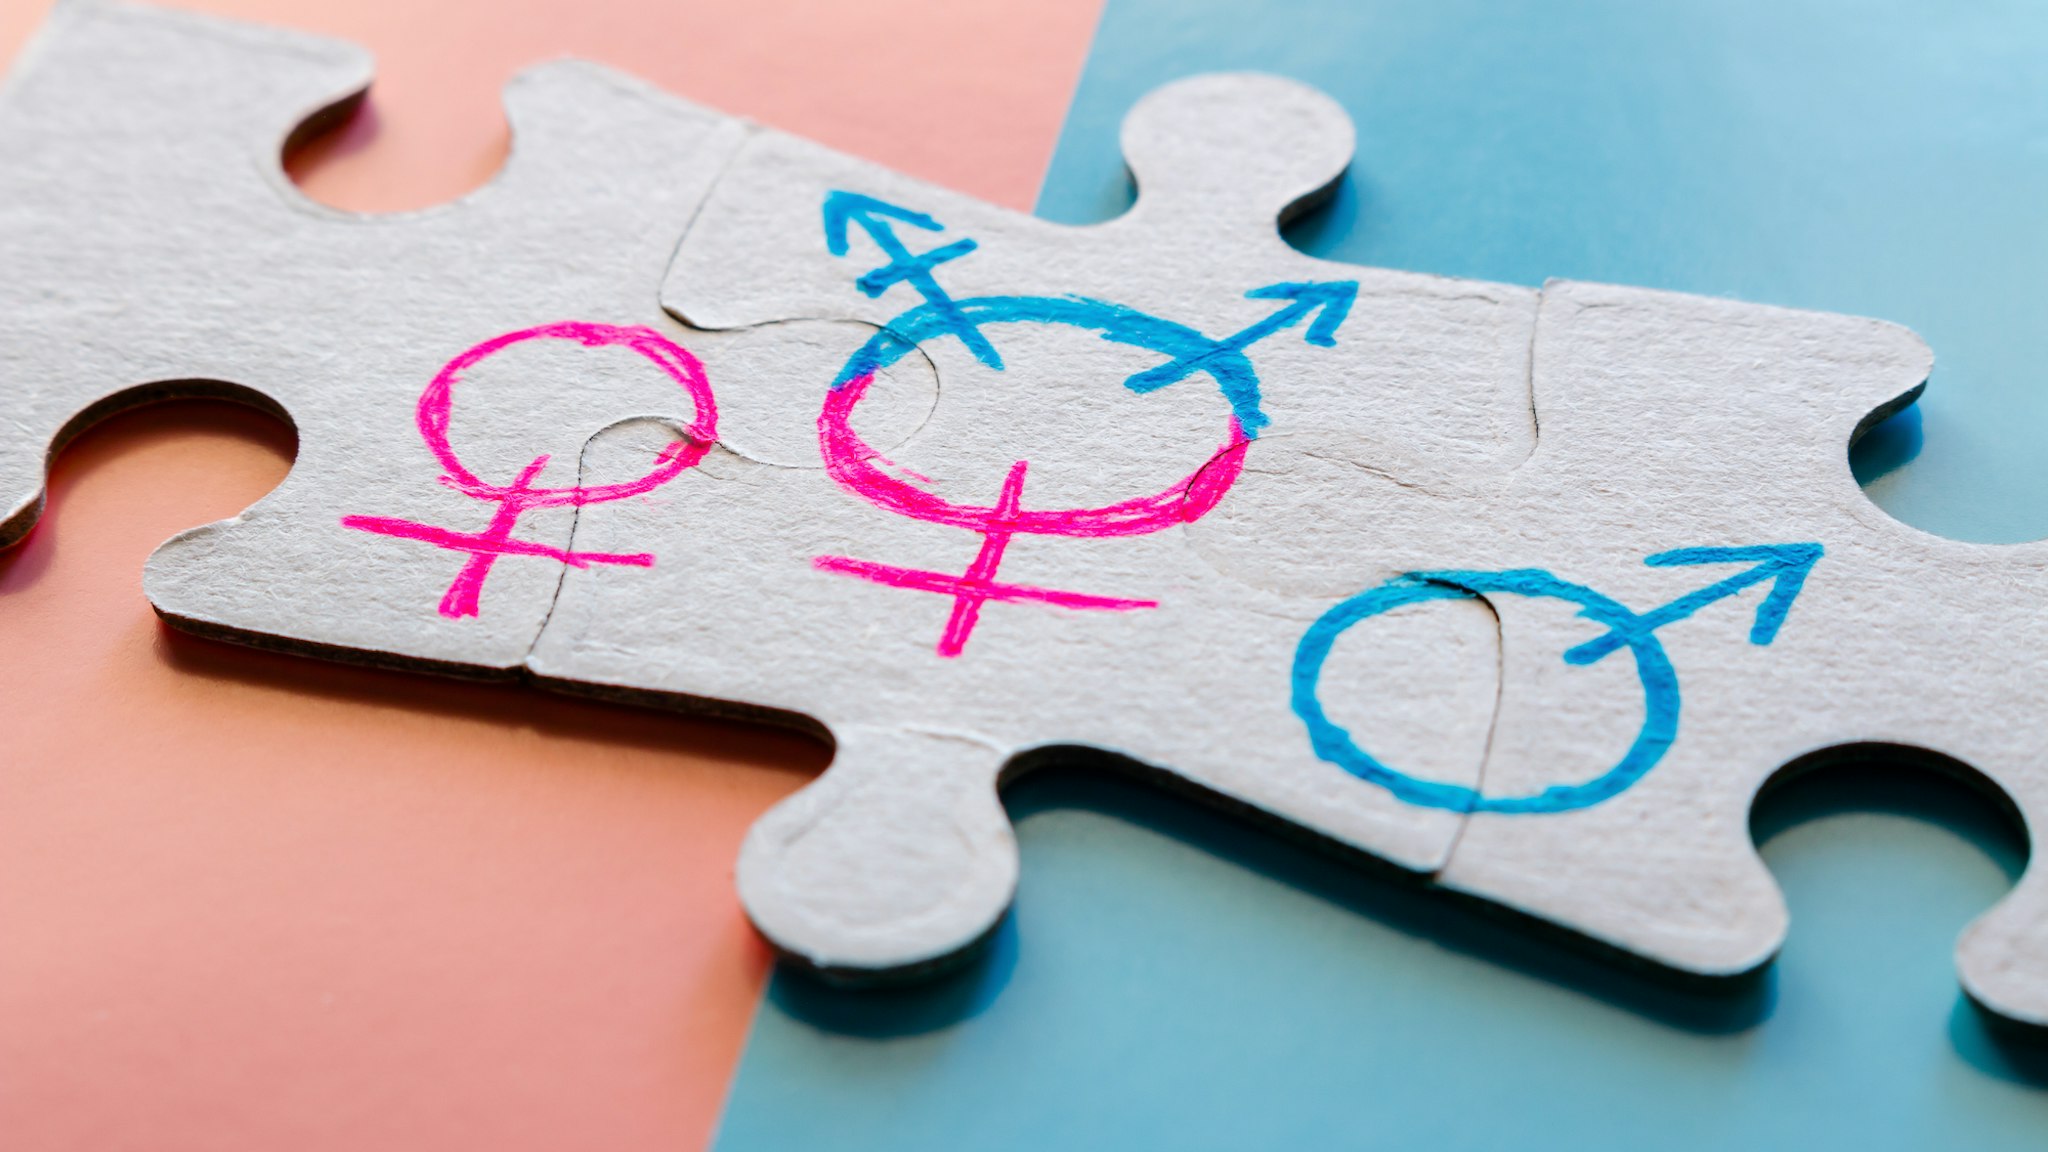 Puzzle with gender symbols. gender equality concept